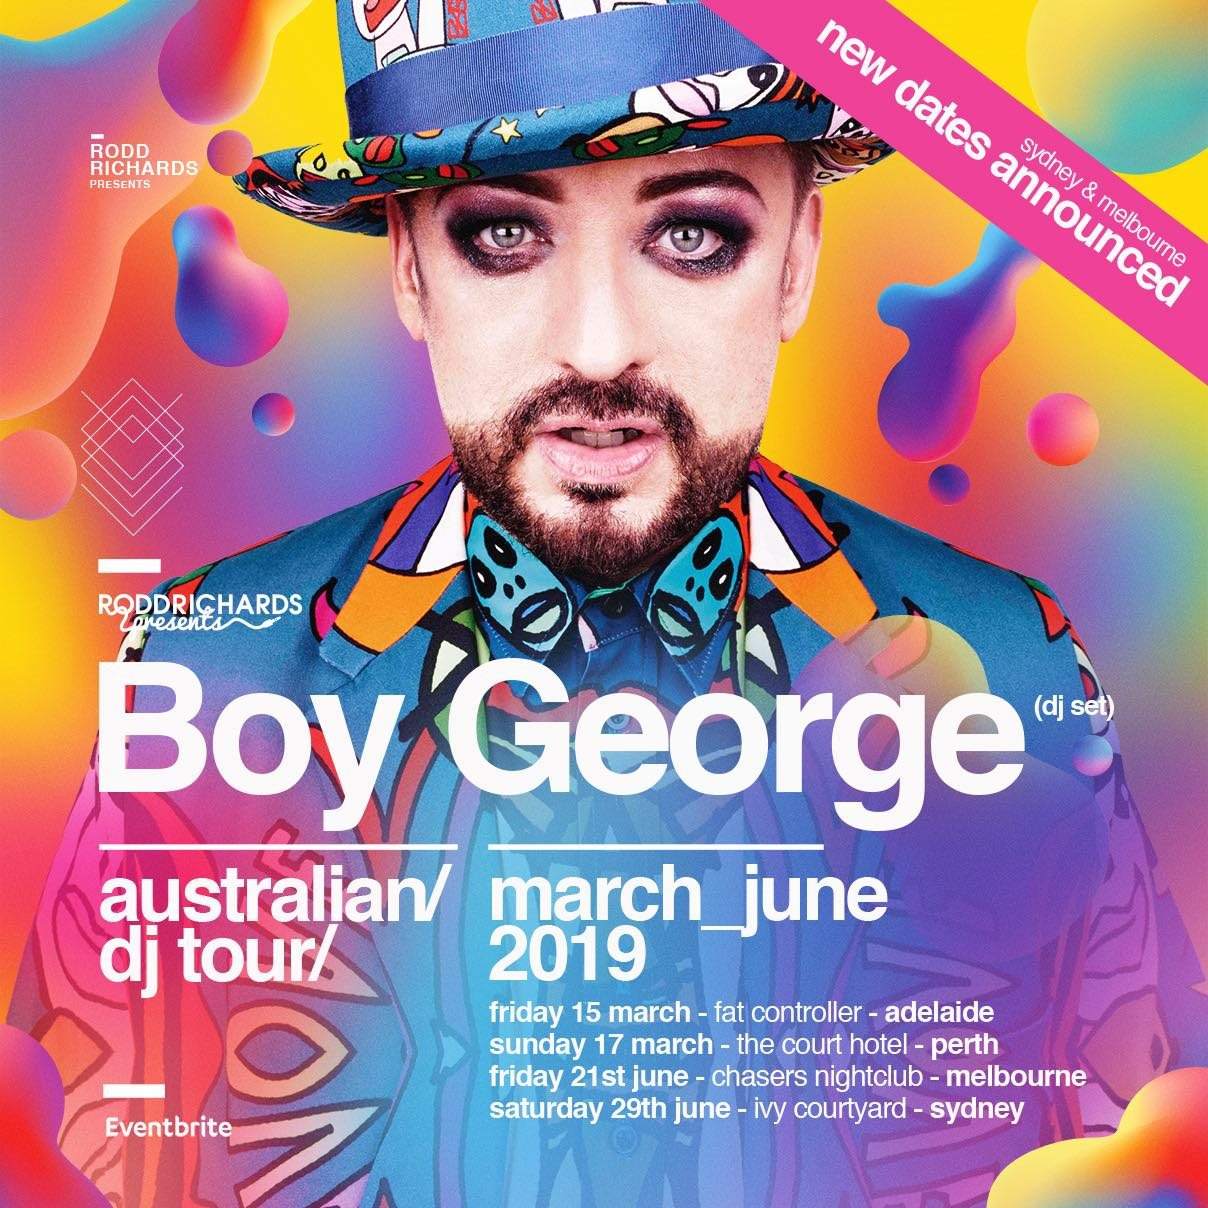 Rodd Richards presents: Boy George Australian DJ Tour - フライヤー表